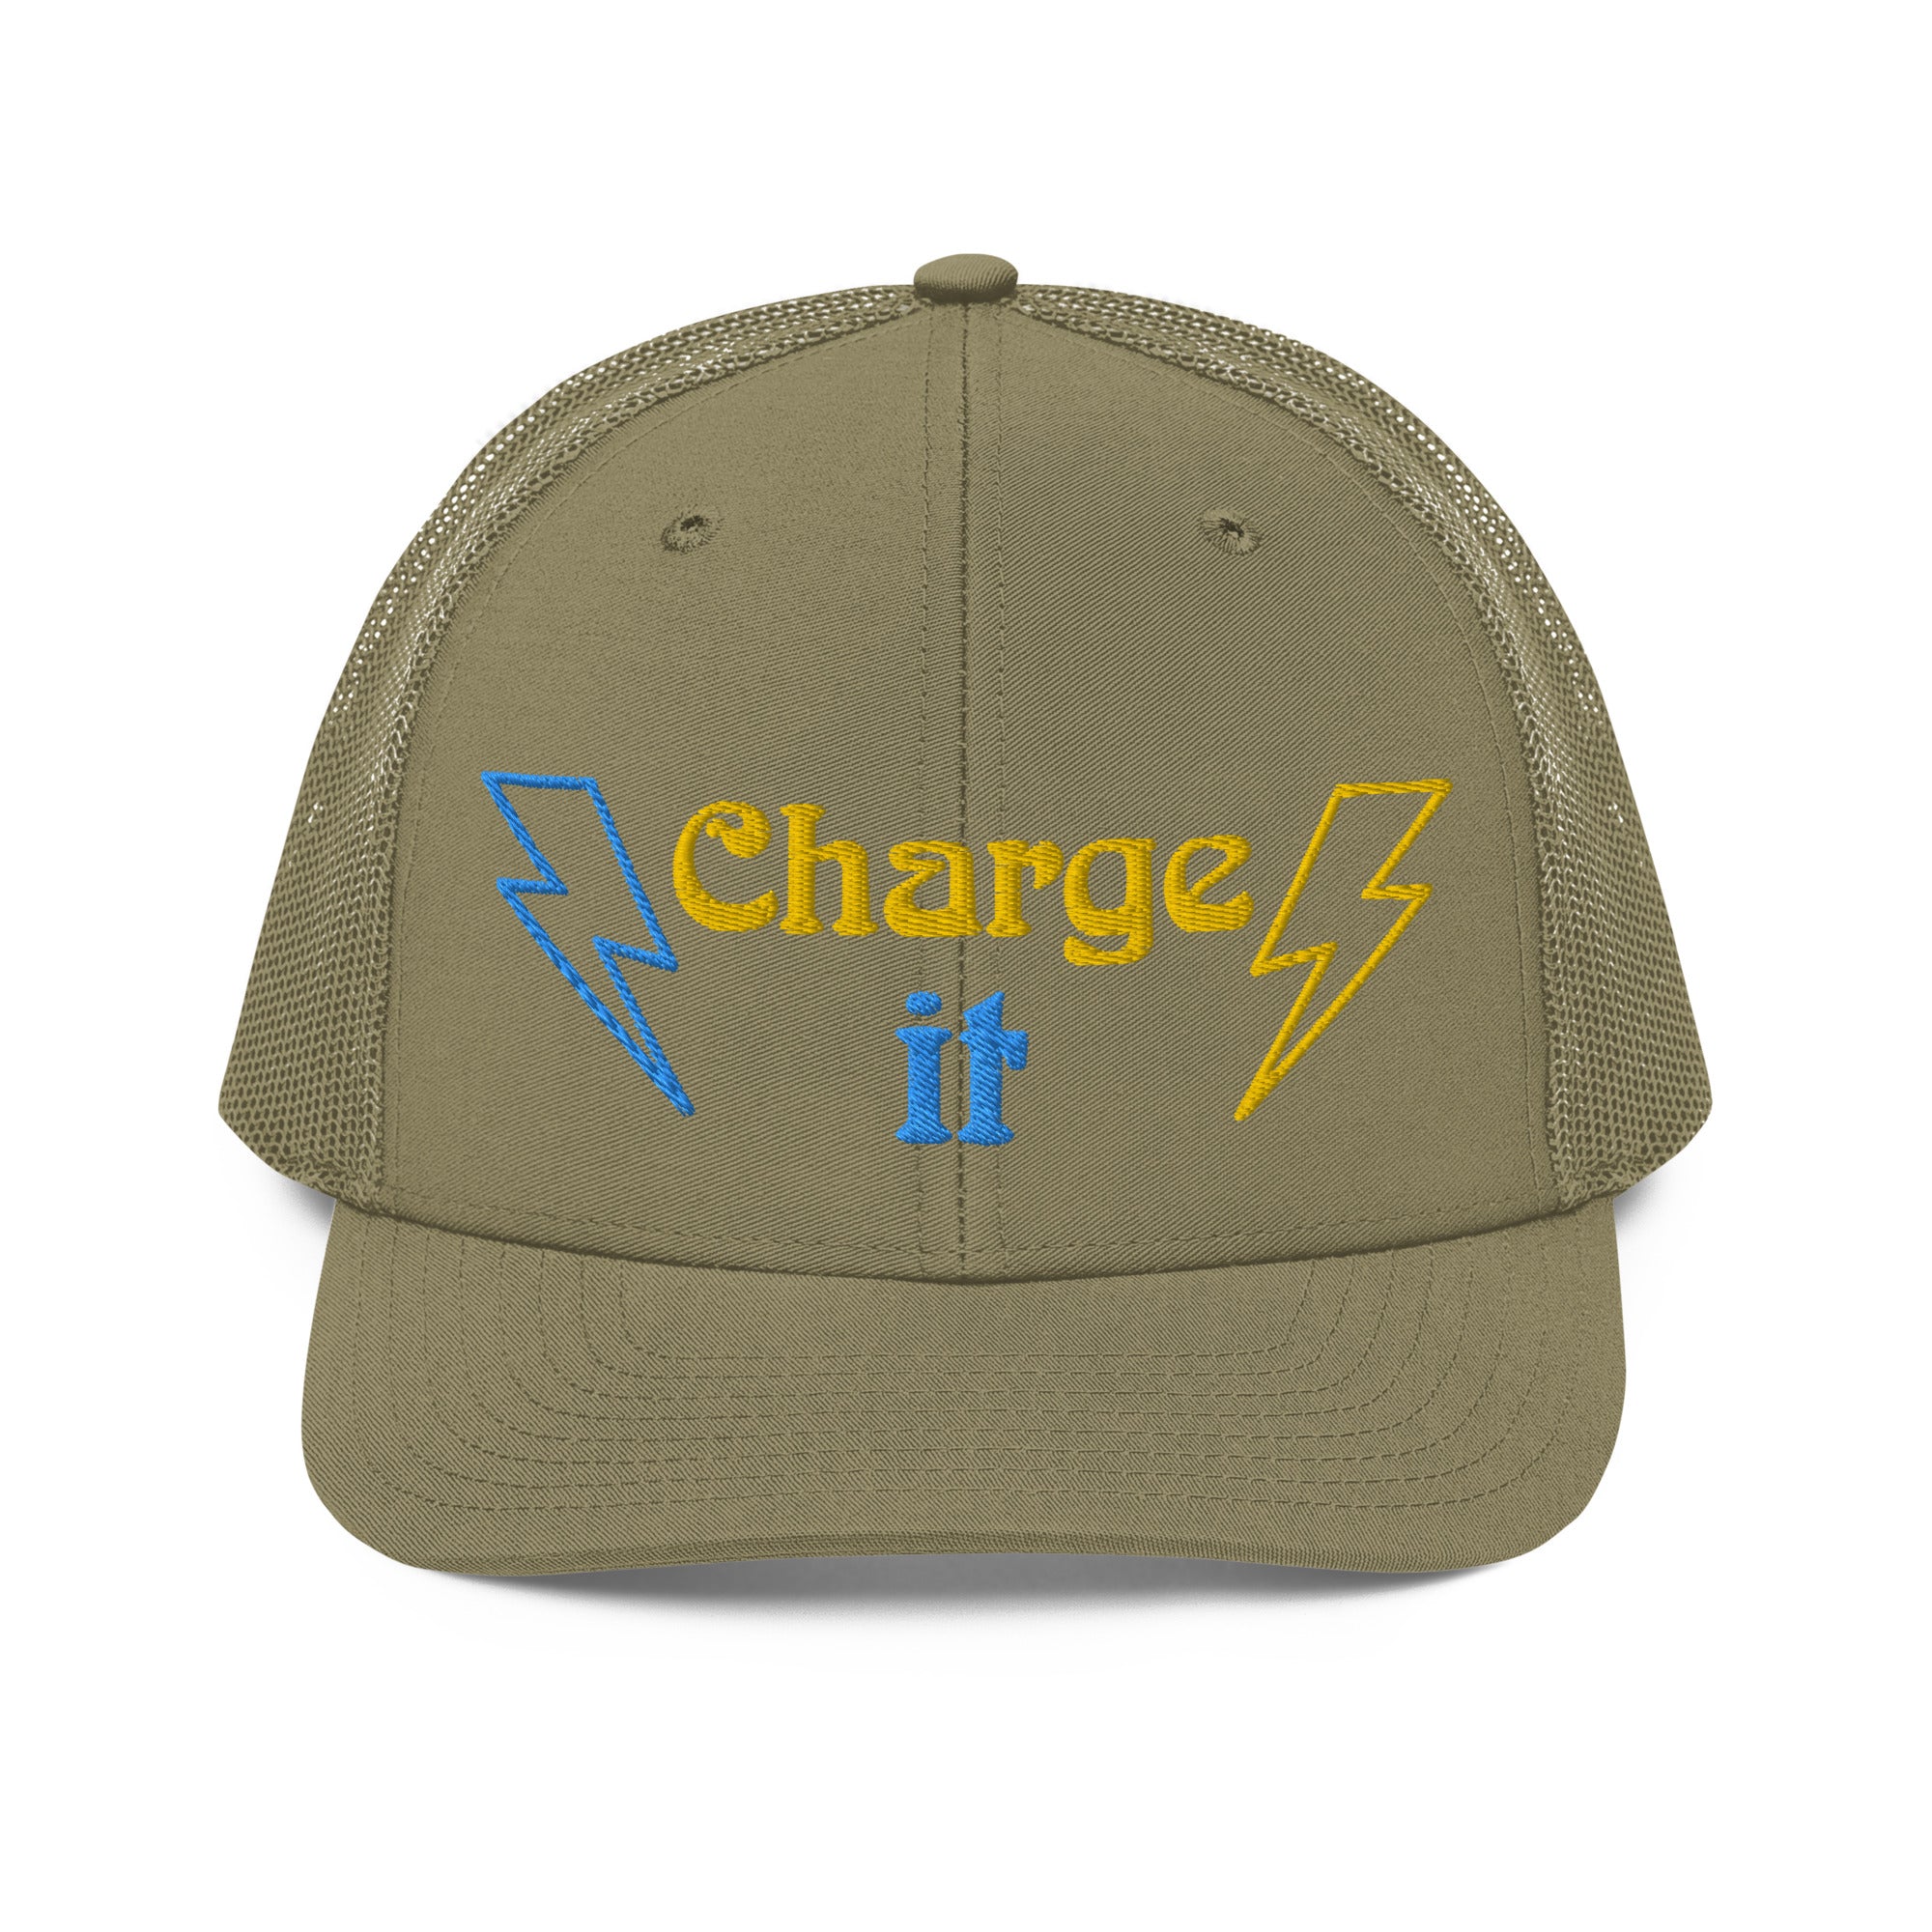 Charge it Trucker Cap